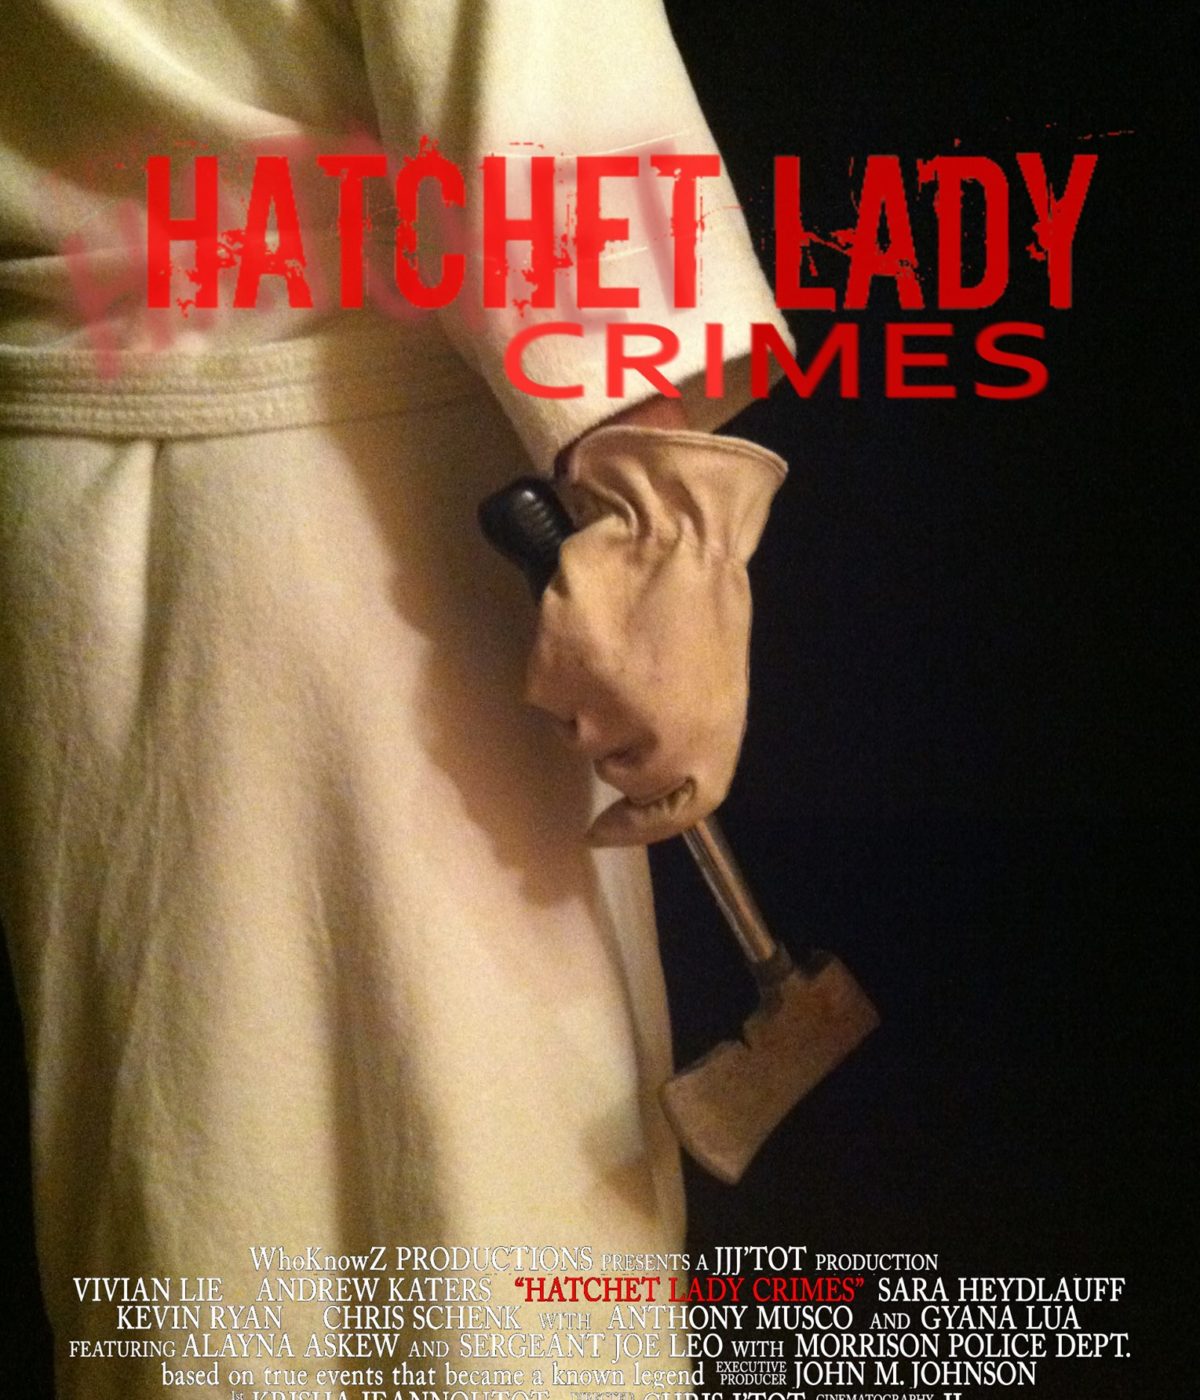 MOVIE POSTER - Hatchet Lady Crimes